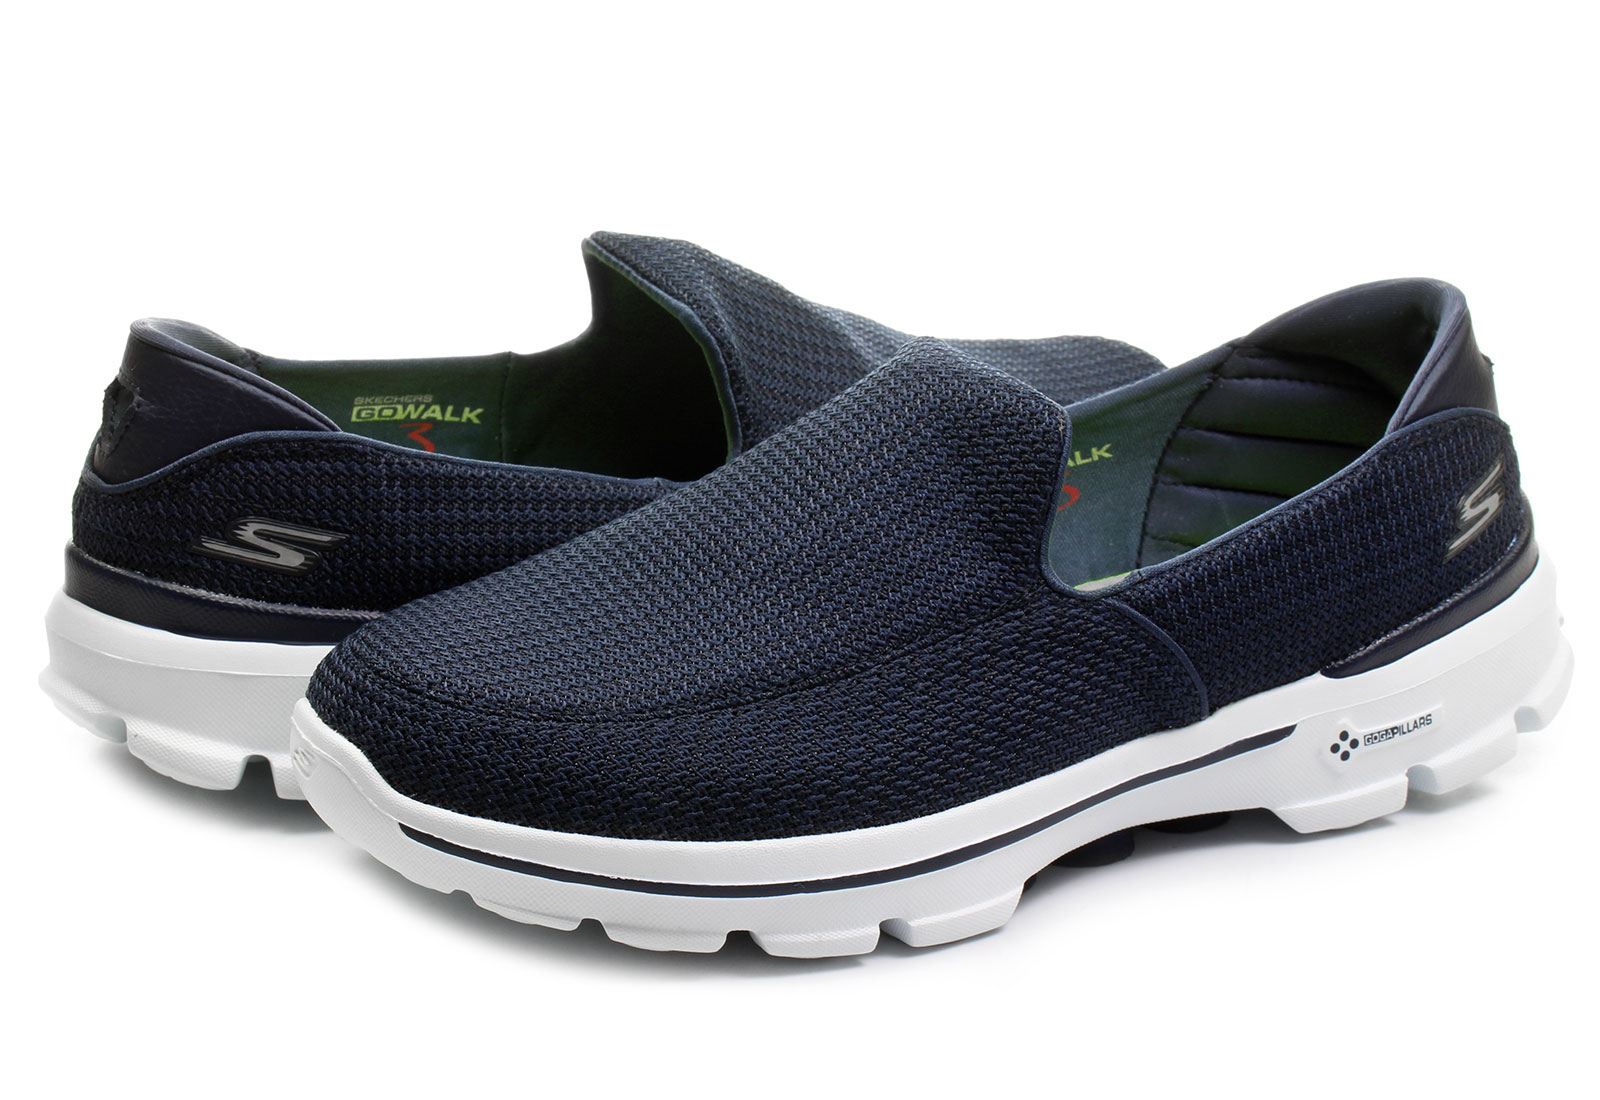 Skechers Slip-on - Go Walk 3 - 53980-nvw - Online shop for sneakers ...